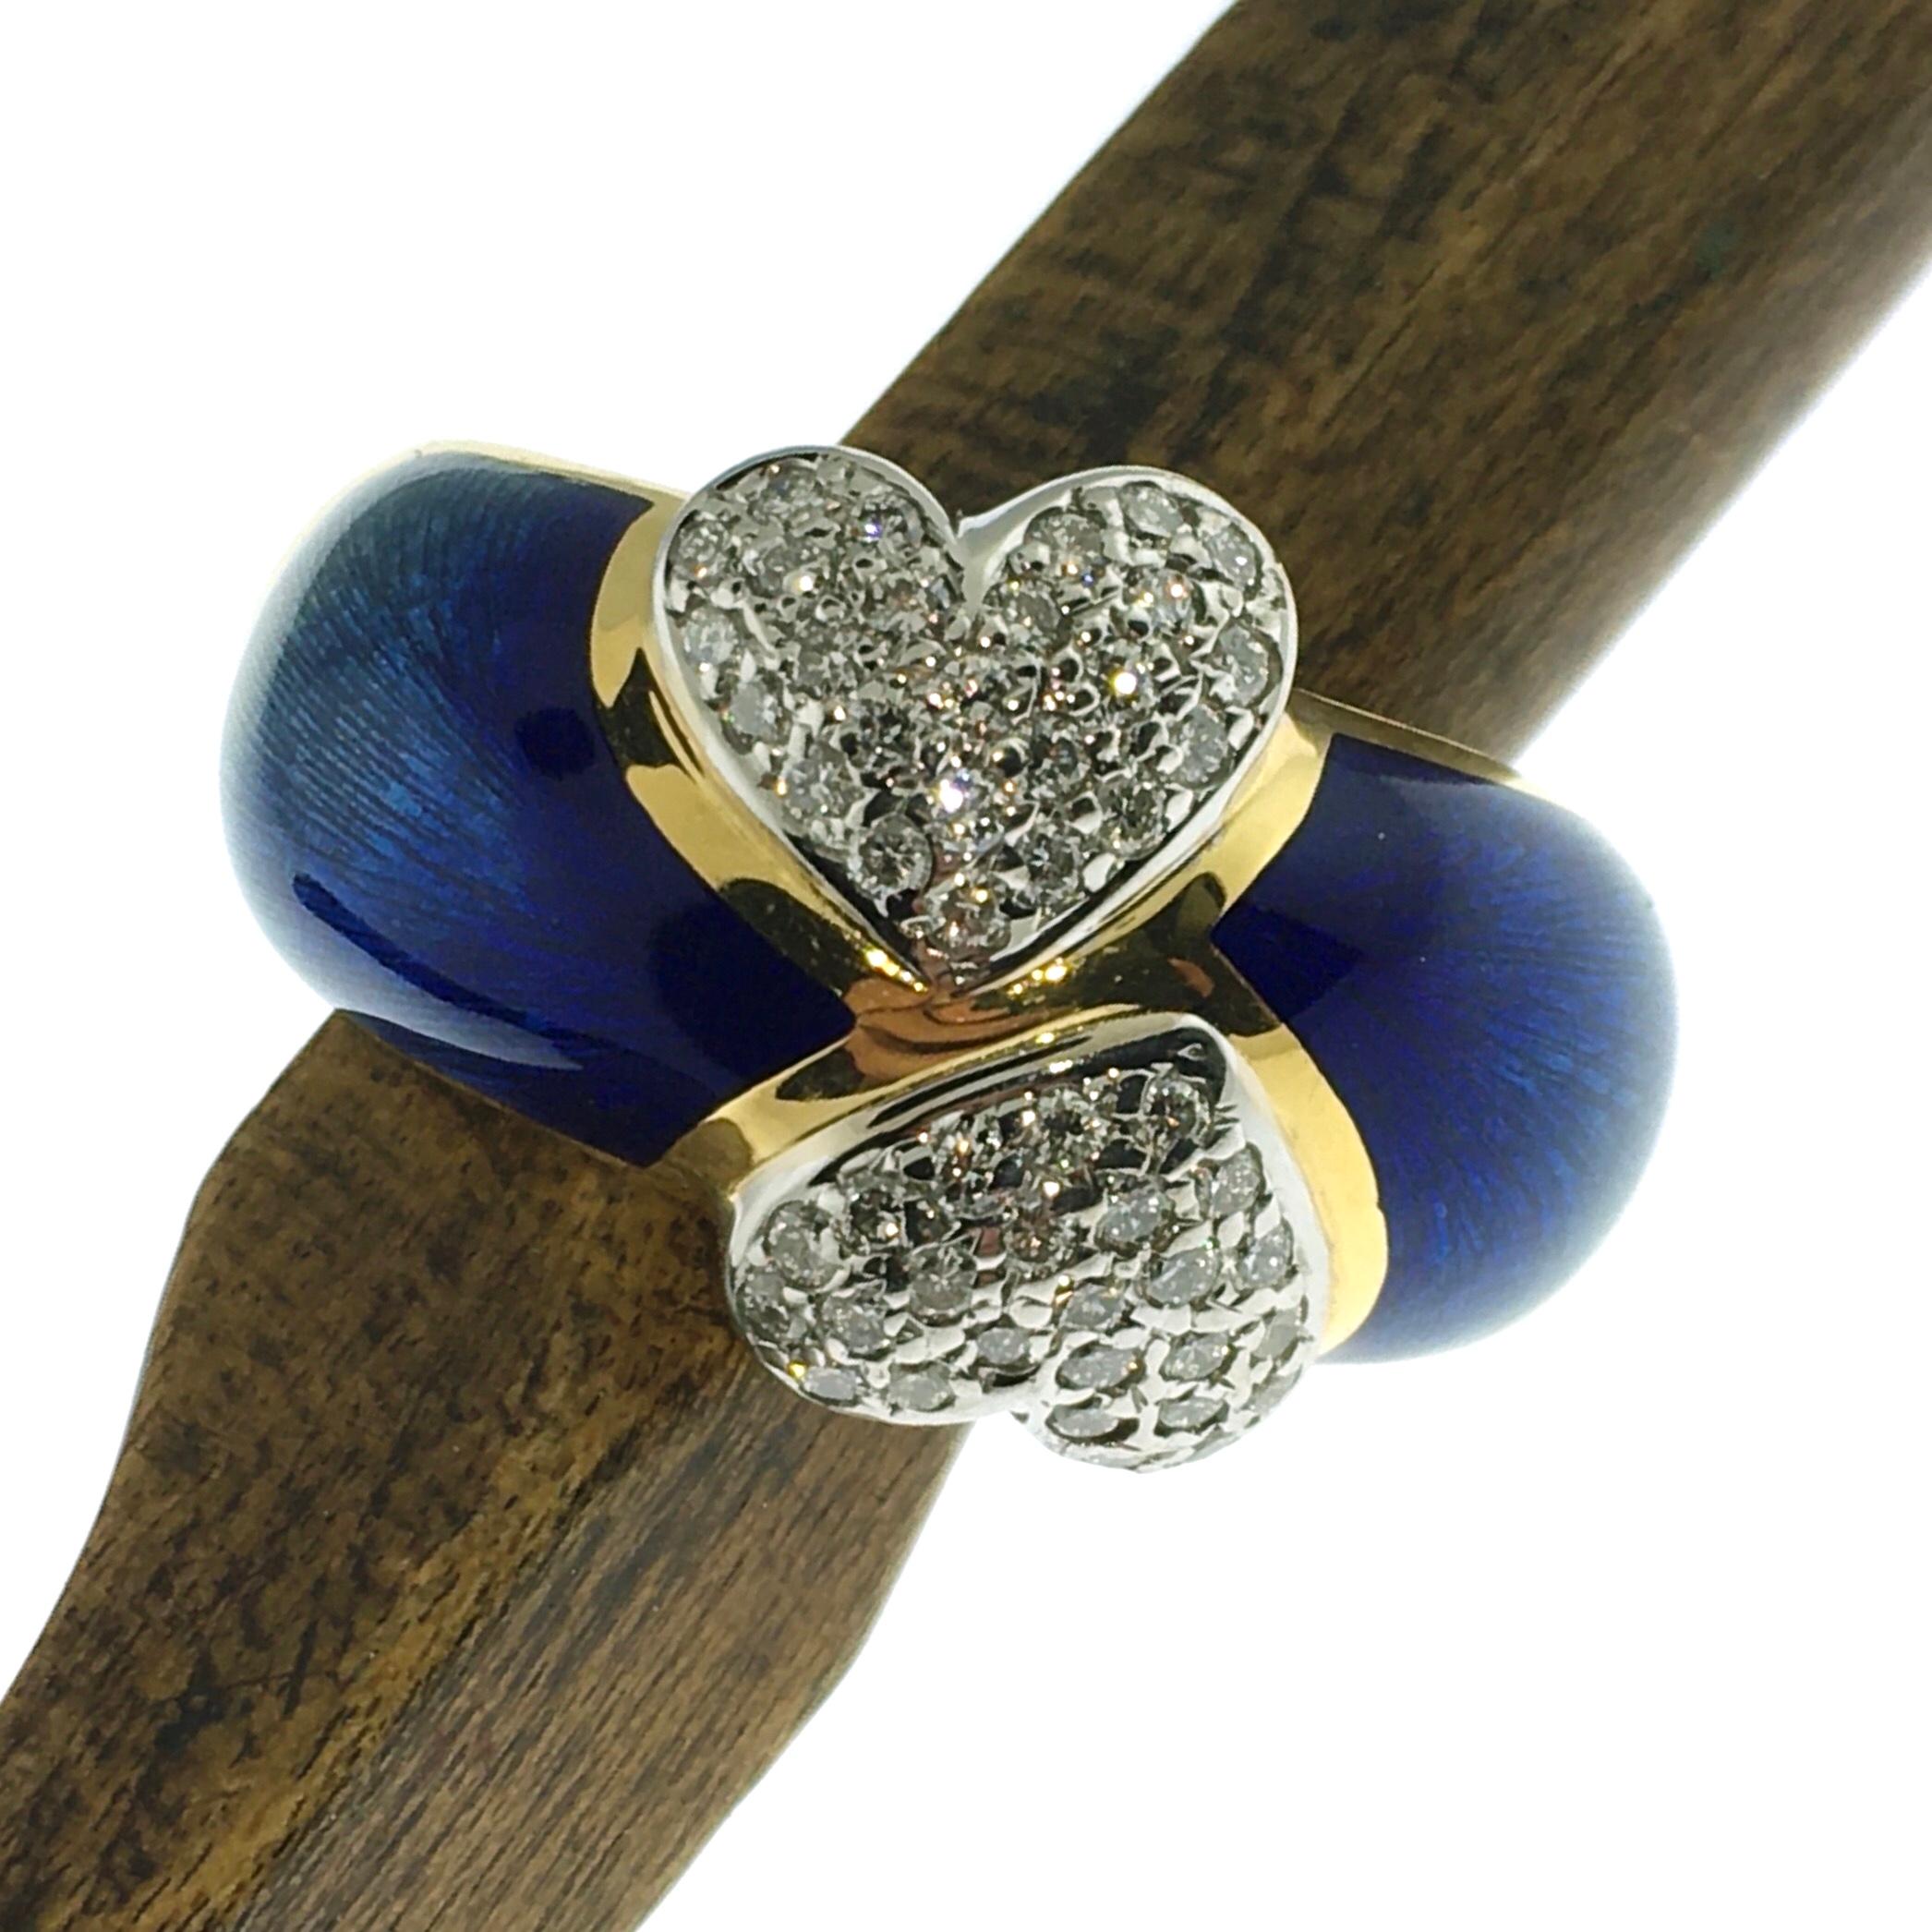 Modern Ring, Gold, Diamond Hearts, Blue Enamel, Handmade, Unique Piece, 18 Carat Gold For Sale